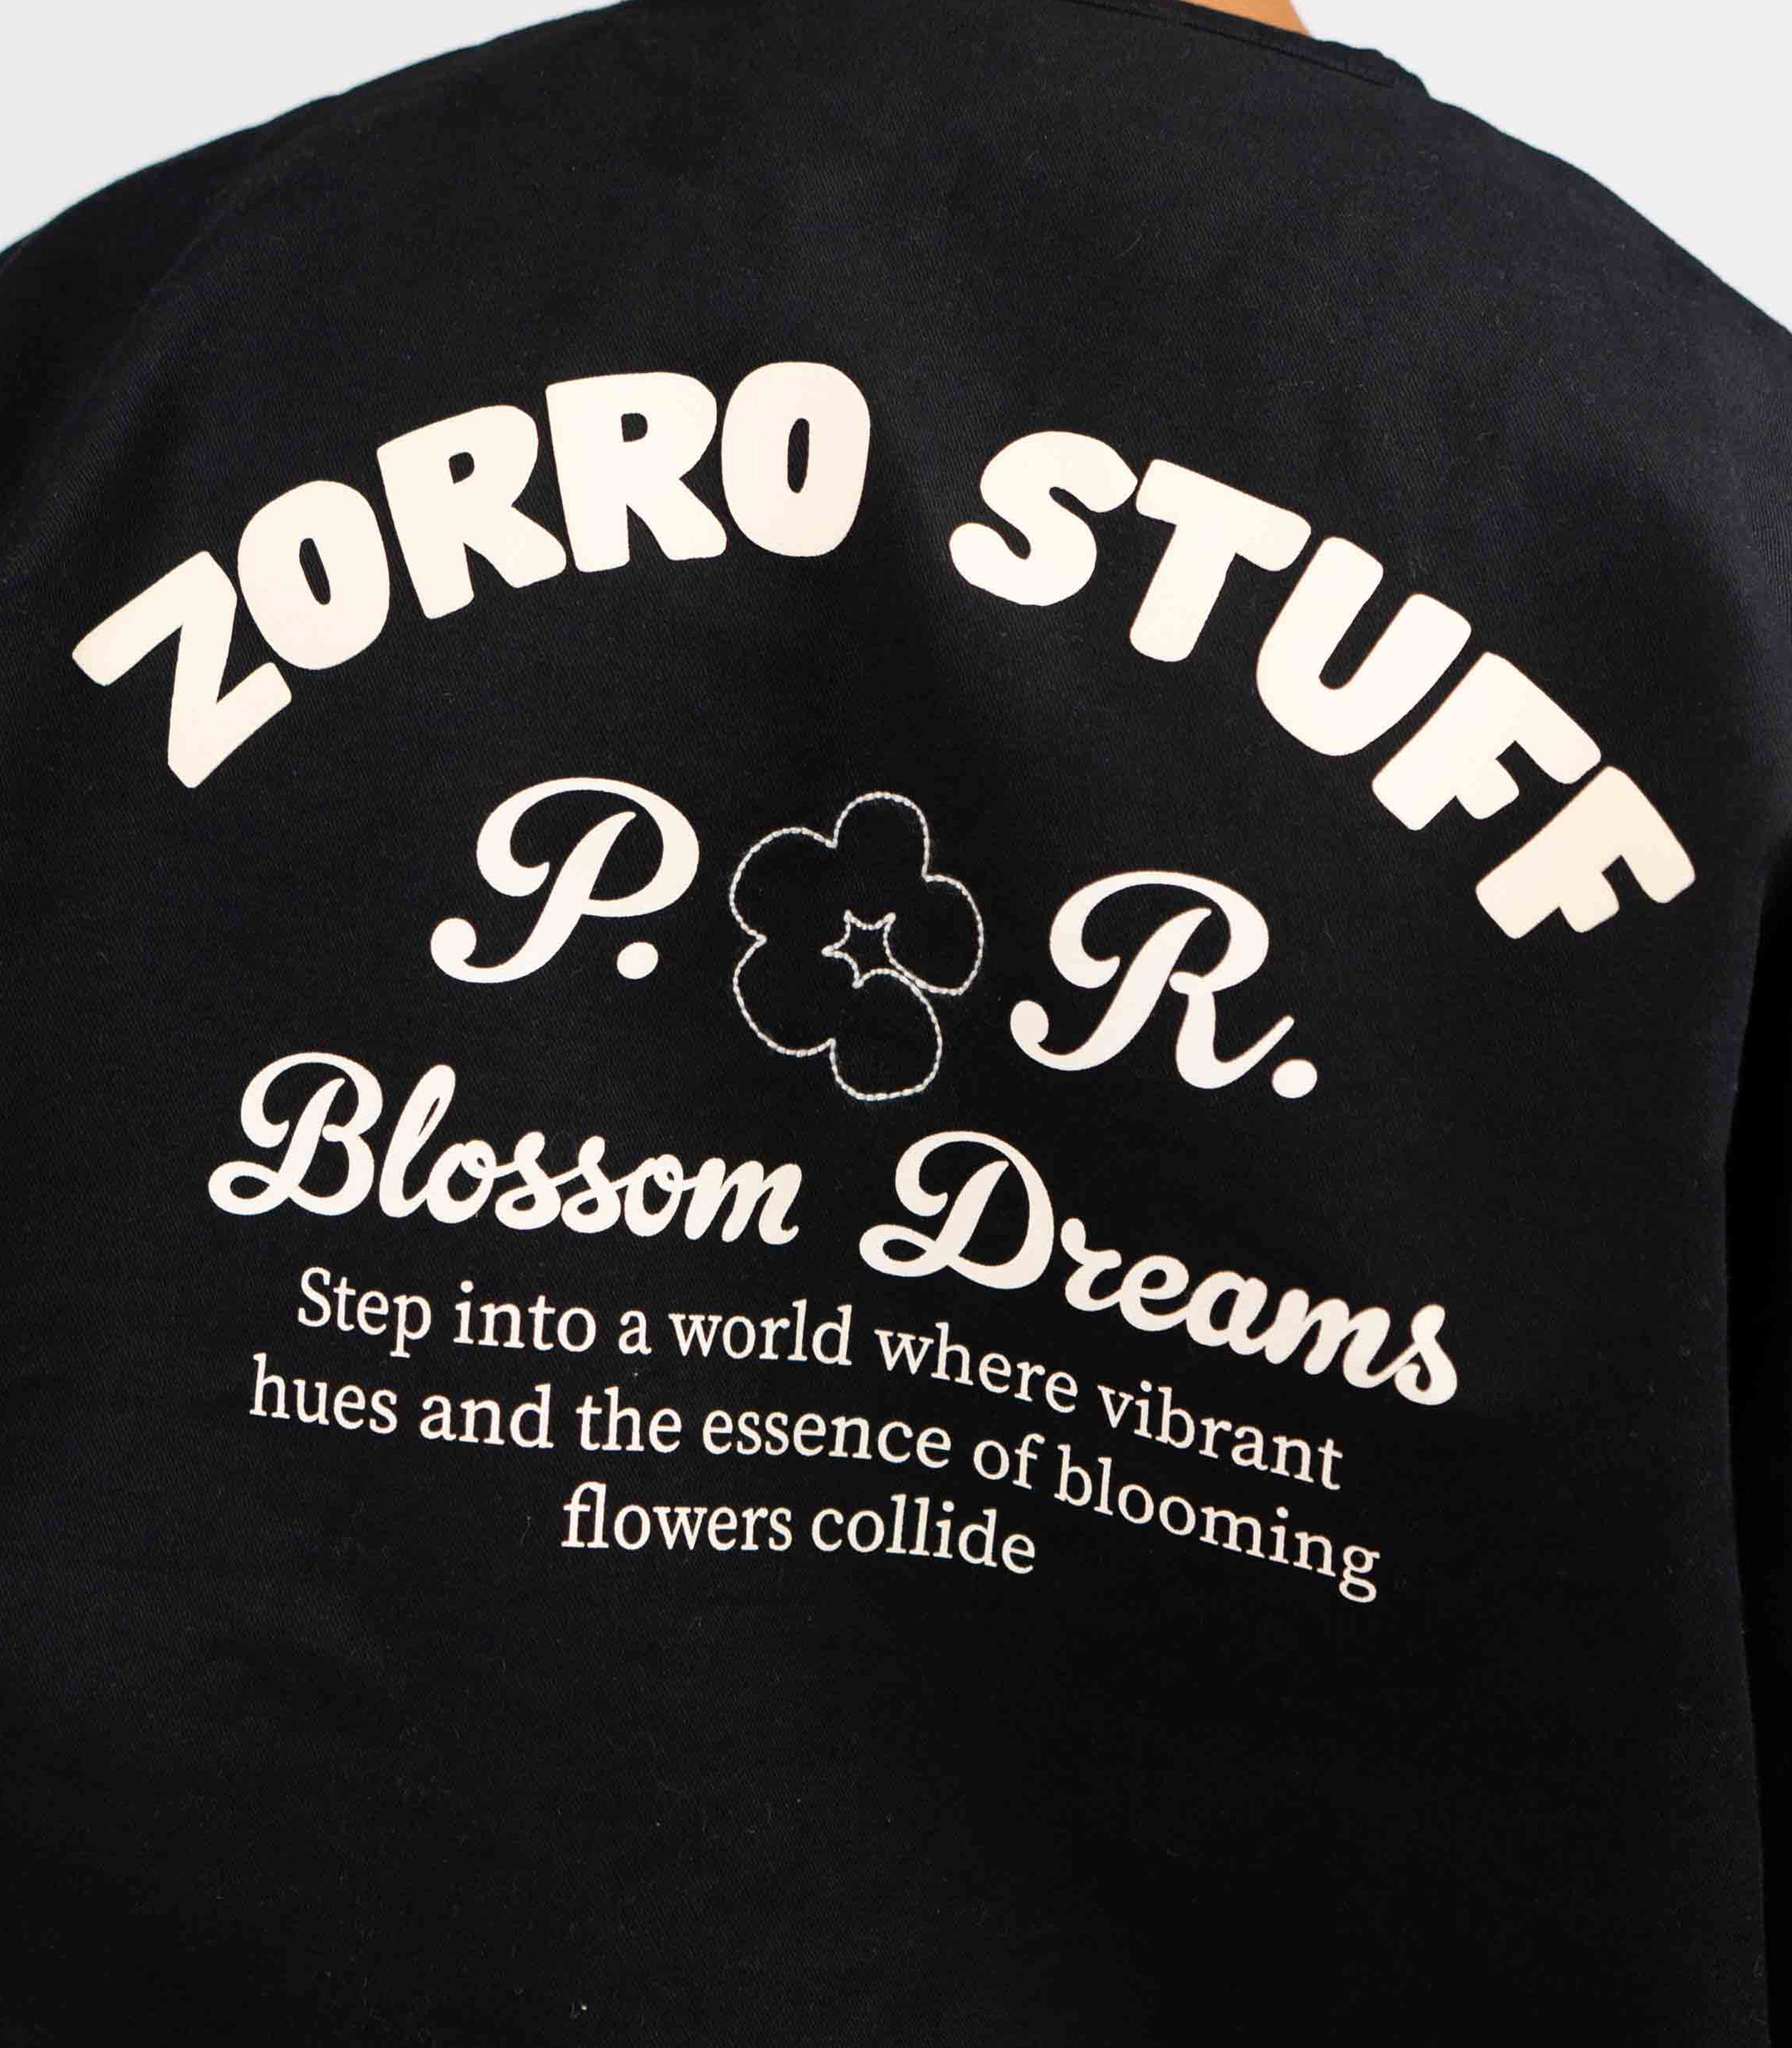 Zorro Stuff SHORT SLEEVE JACKET DRILL BLACK